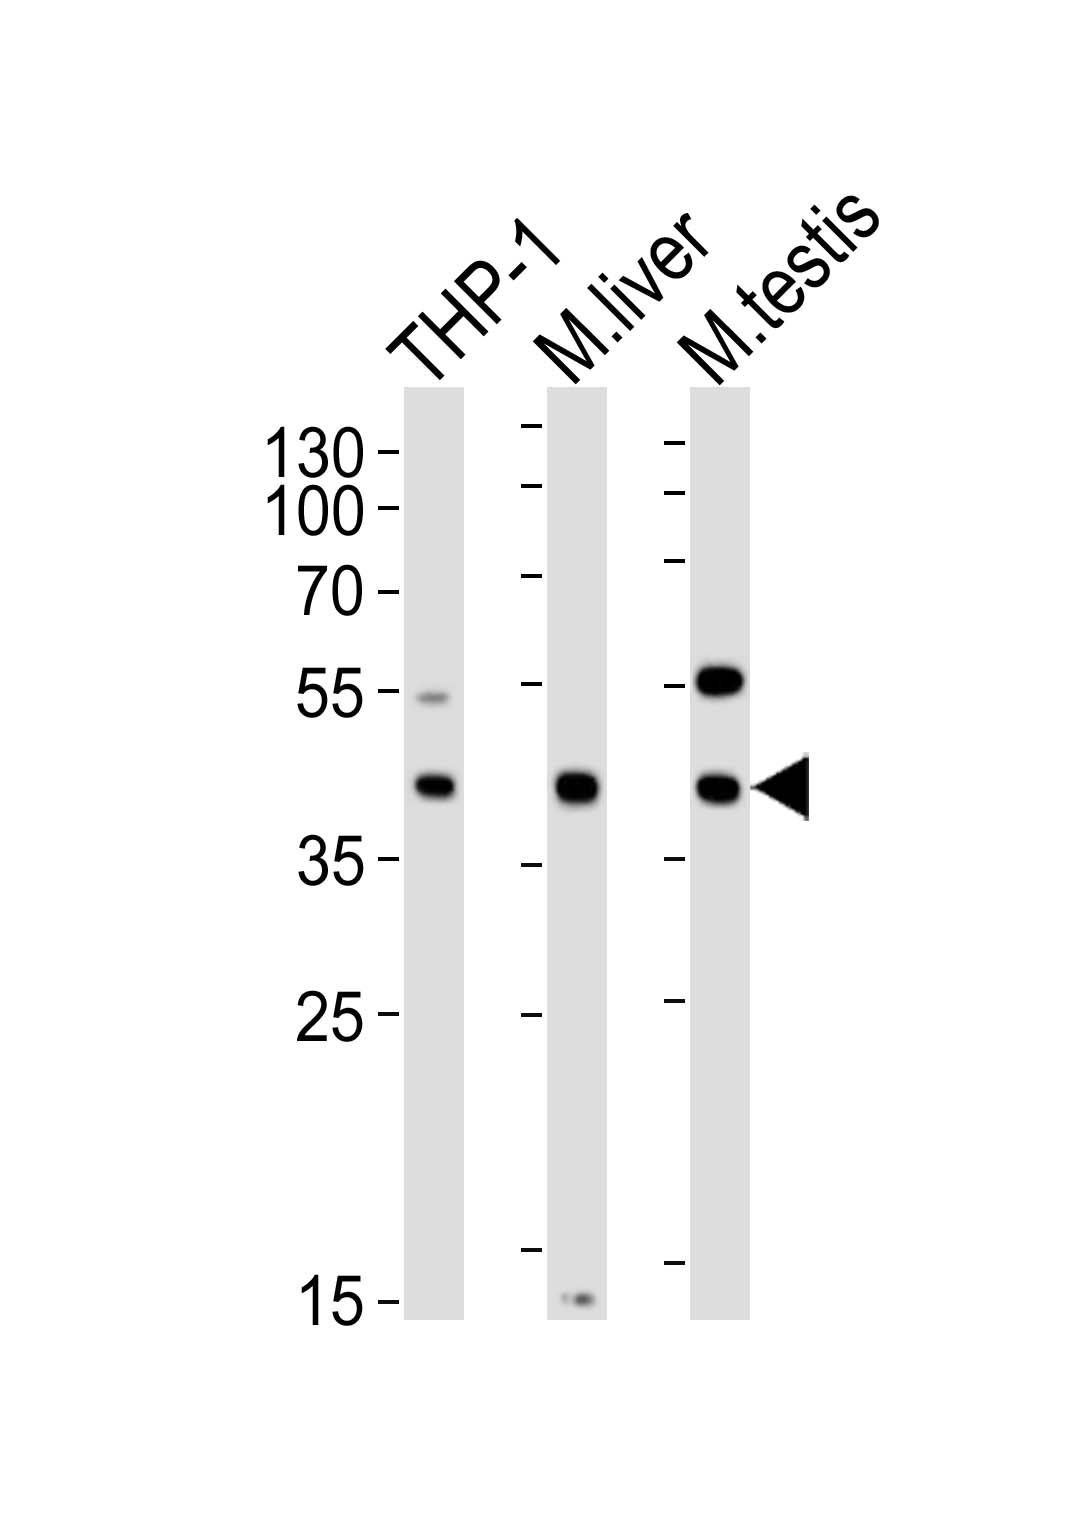 Mouse anti-ATG3 Monoclonal Antibody(1377CT239.6.1.12)